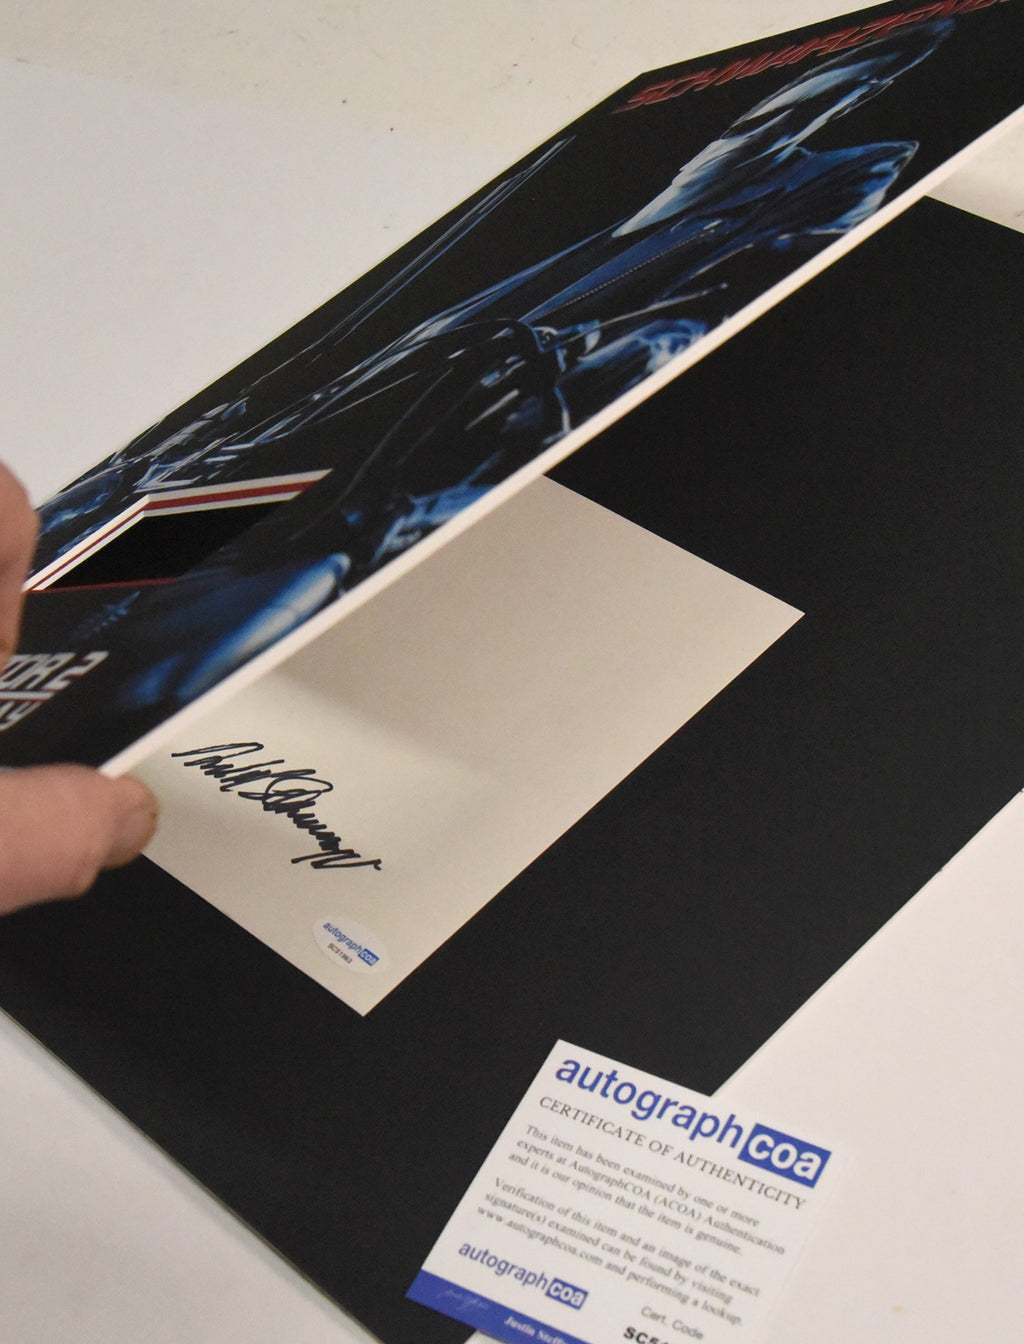 ARNOLD SCHWARZENEGGER autographed "Terminator 2" 12x16 custom mat with book page signature